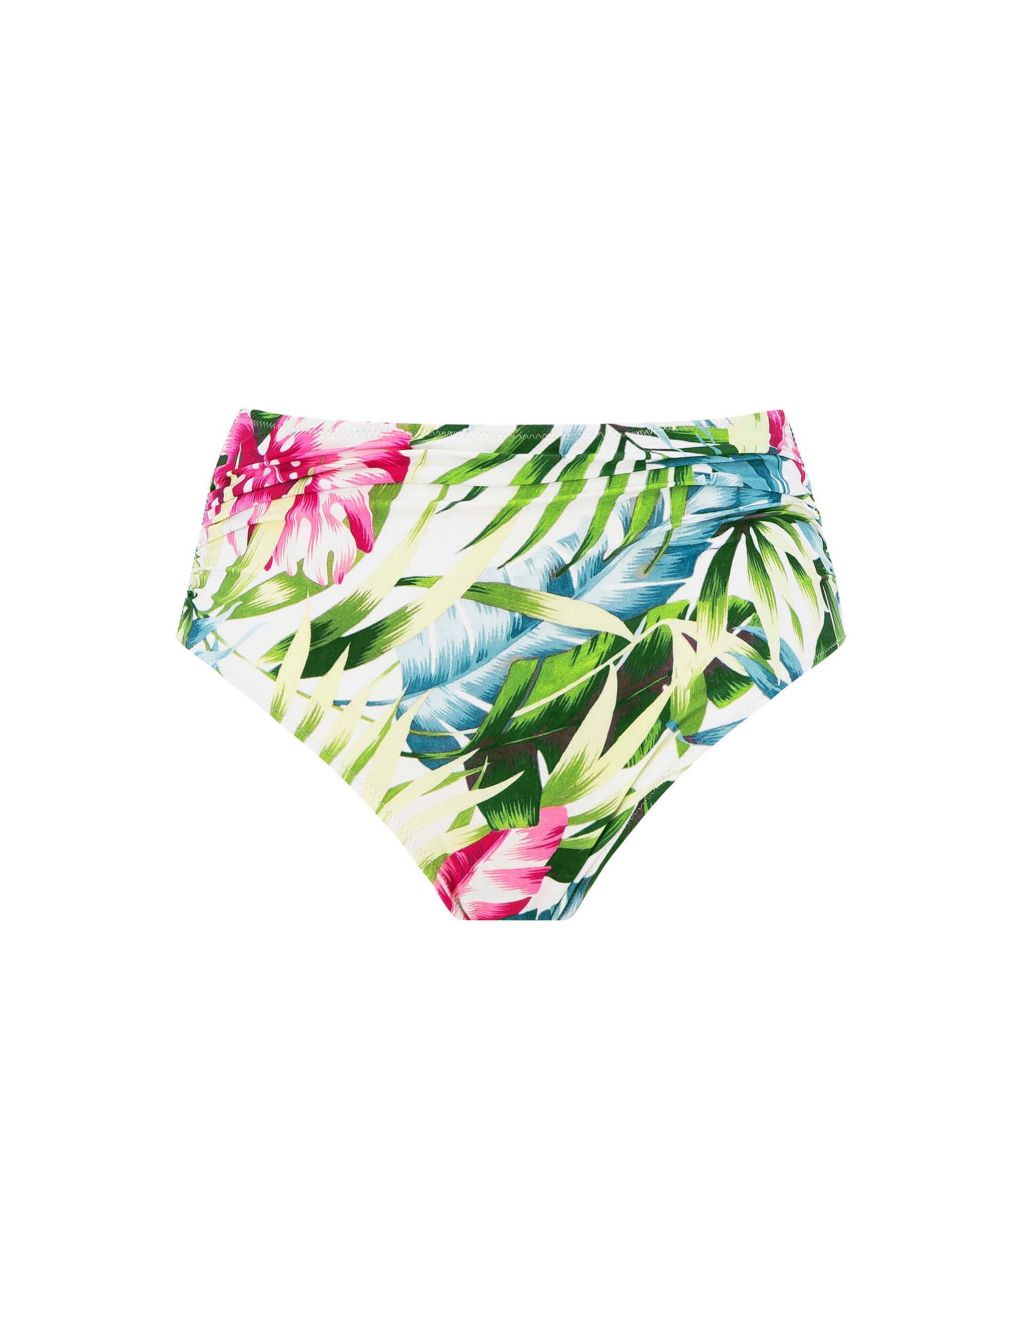 Langkawi Floral High Waisted Bikini Bottoms image 2